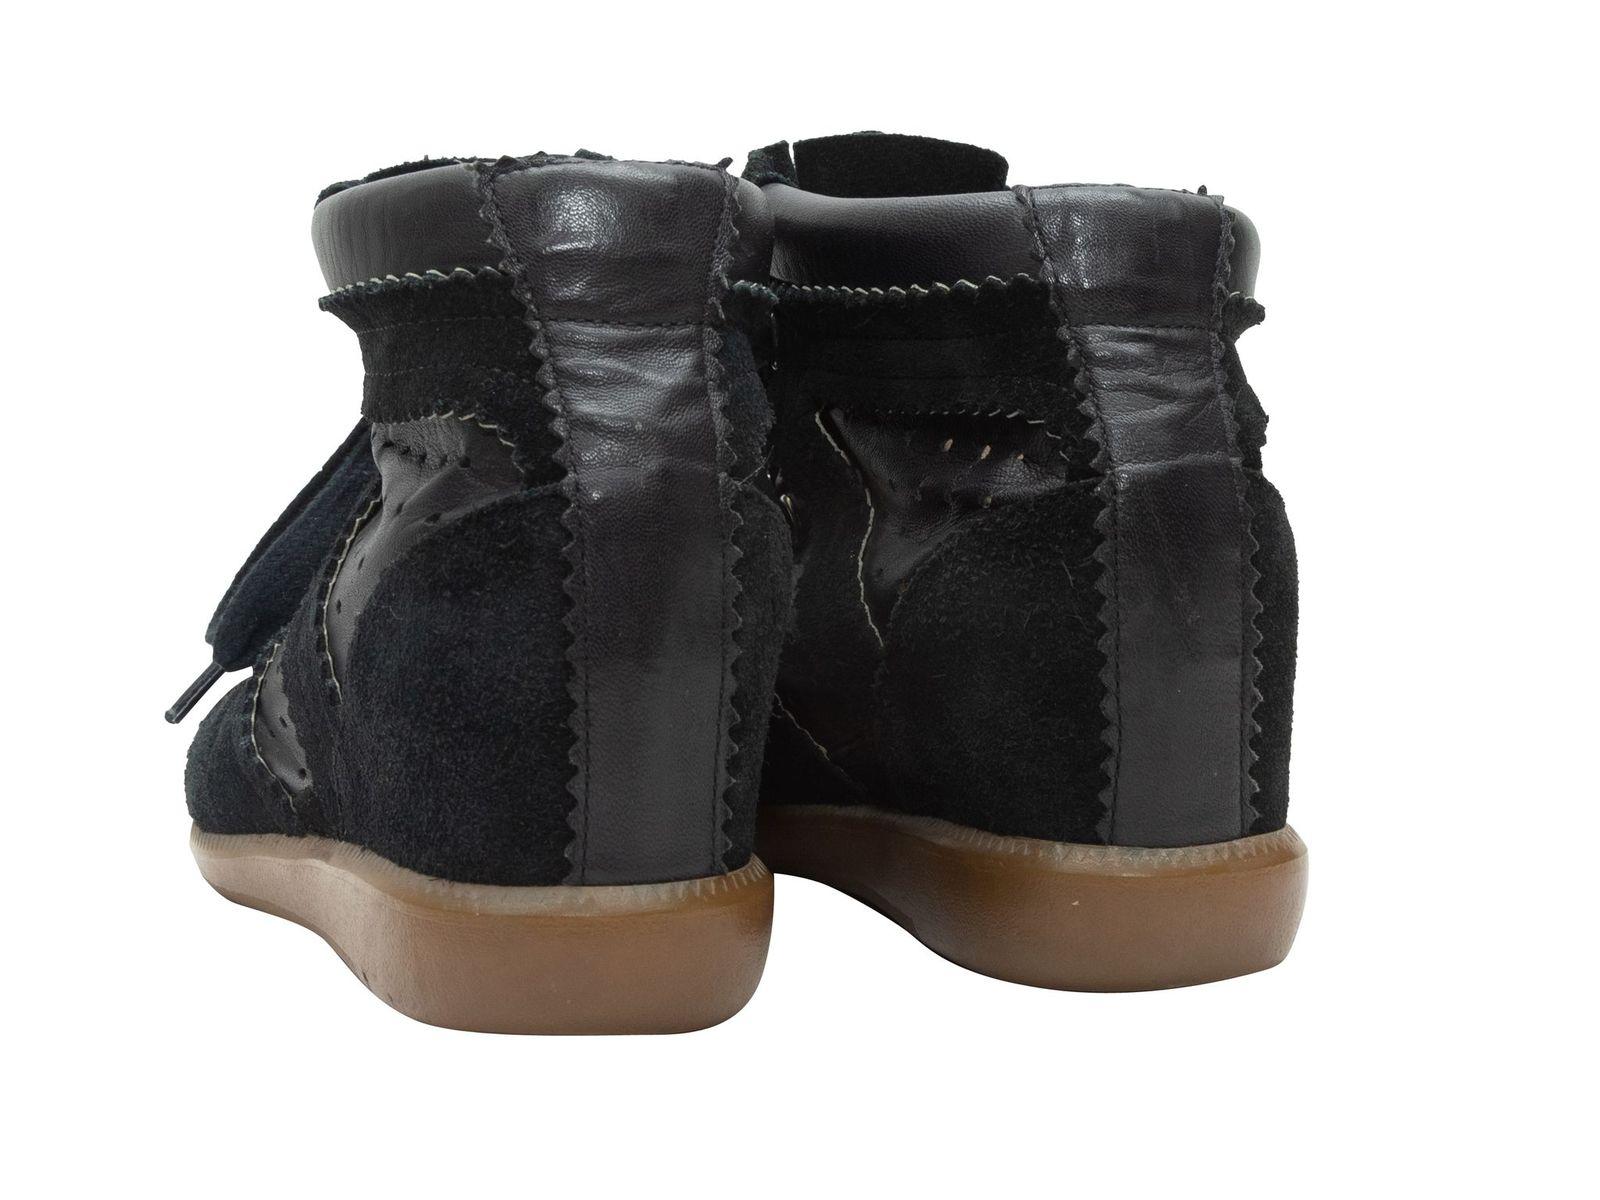 Men's Isabel Marant Black Suede & Leather Wedge Sneakers